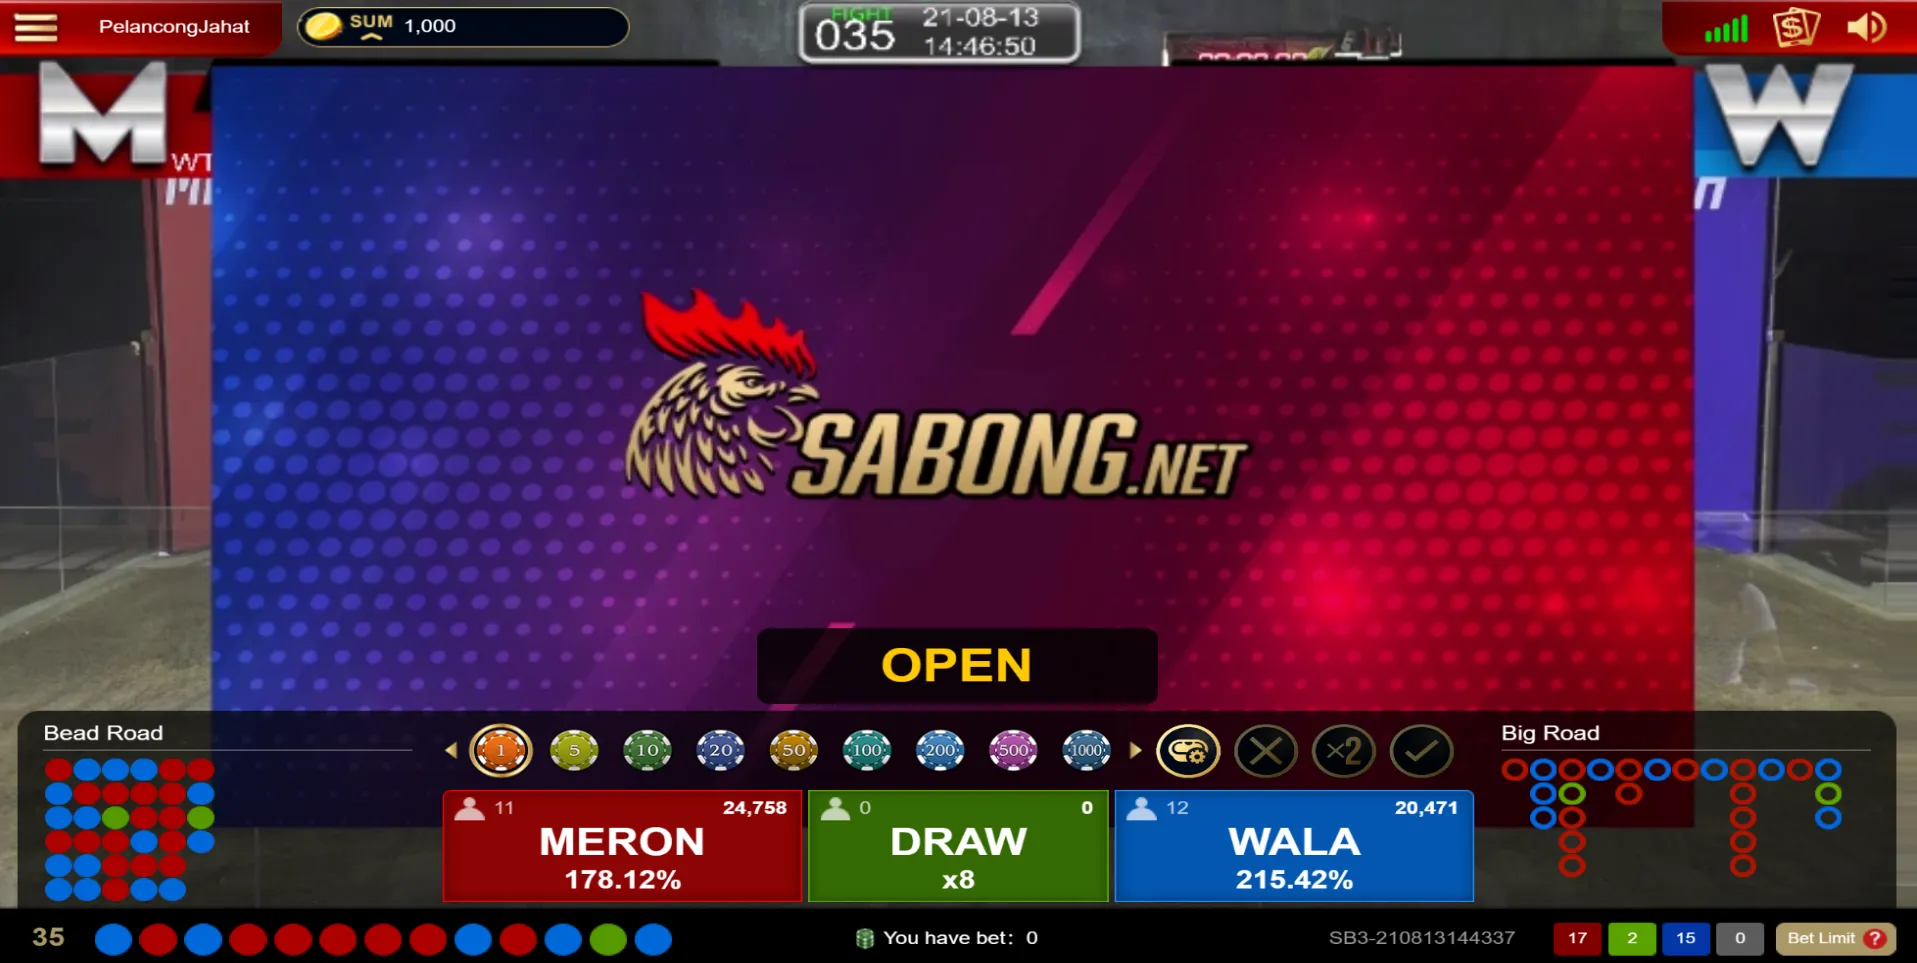 How to Play Sabong International